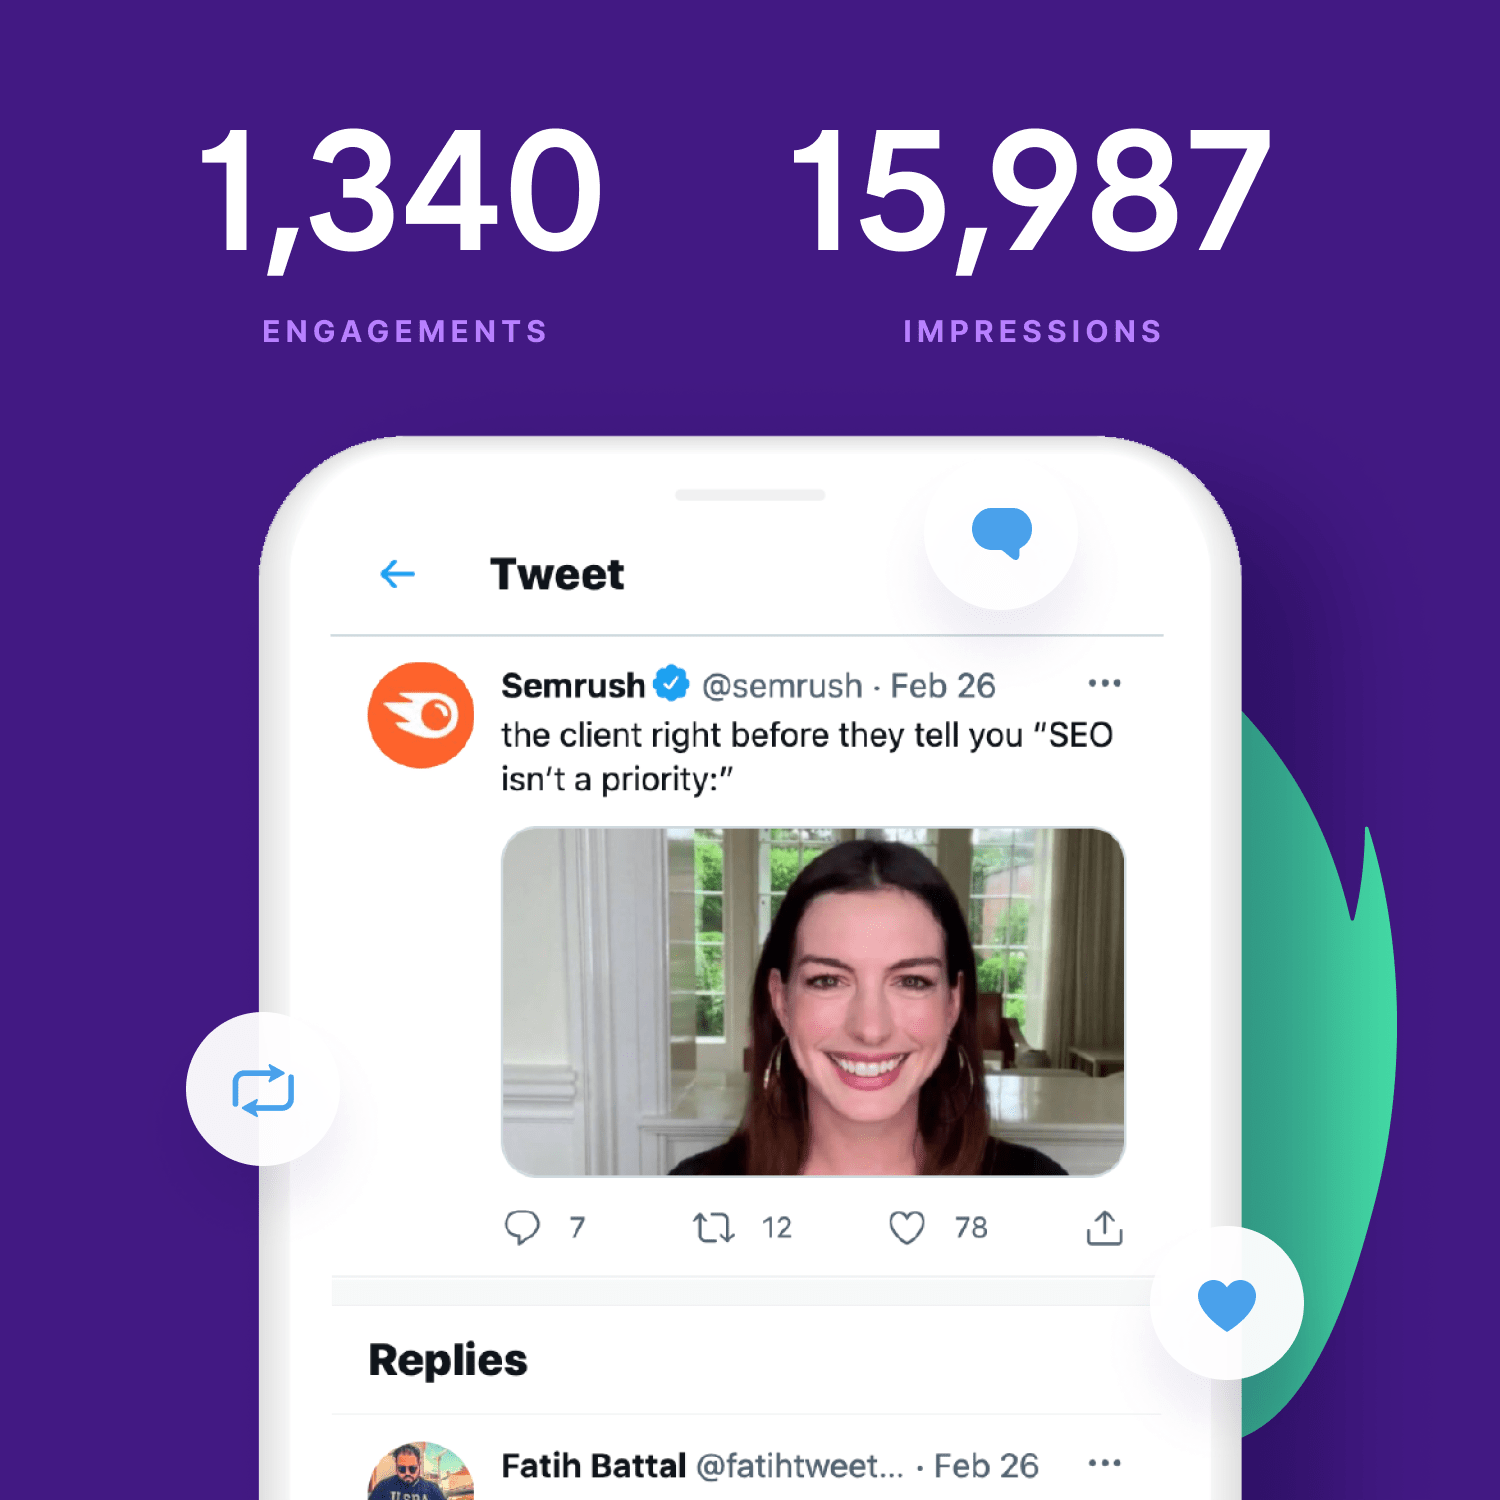 Mockup of phone showing Semrush tweet with engagement. and impression metrics